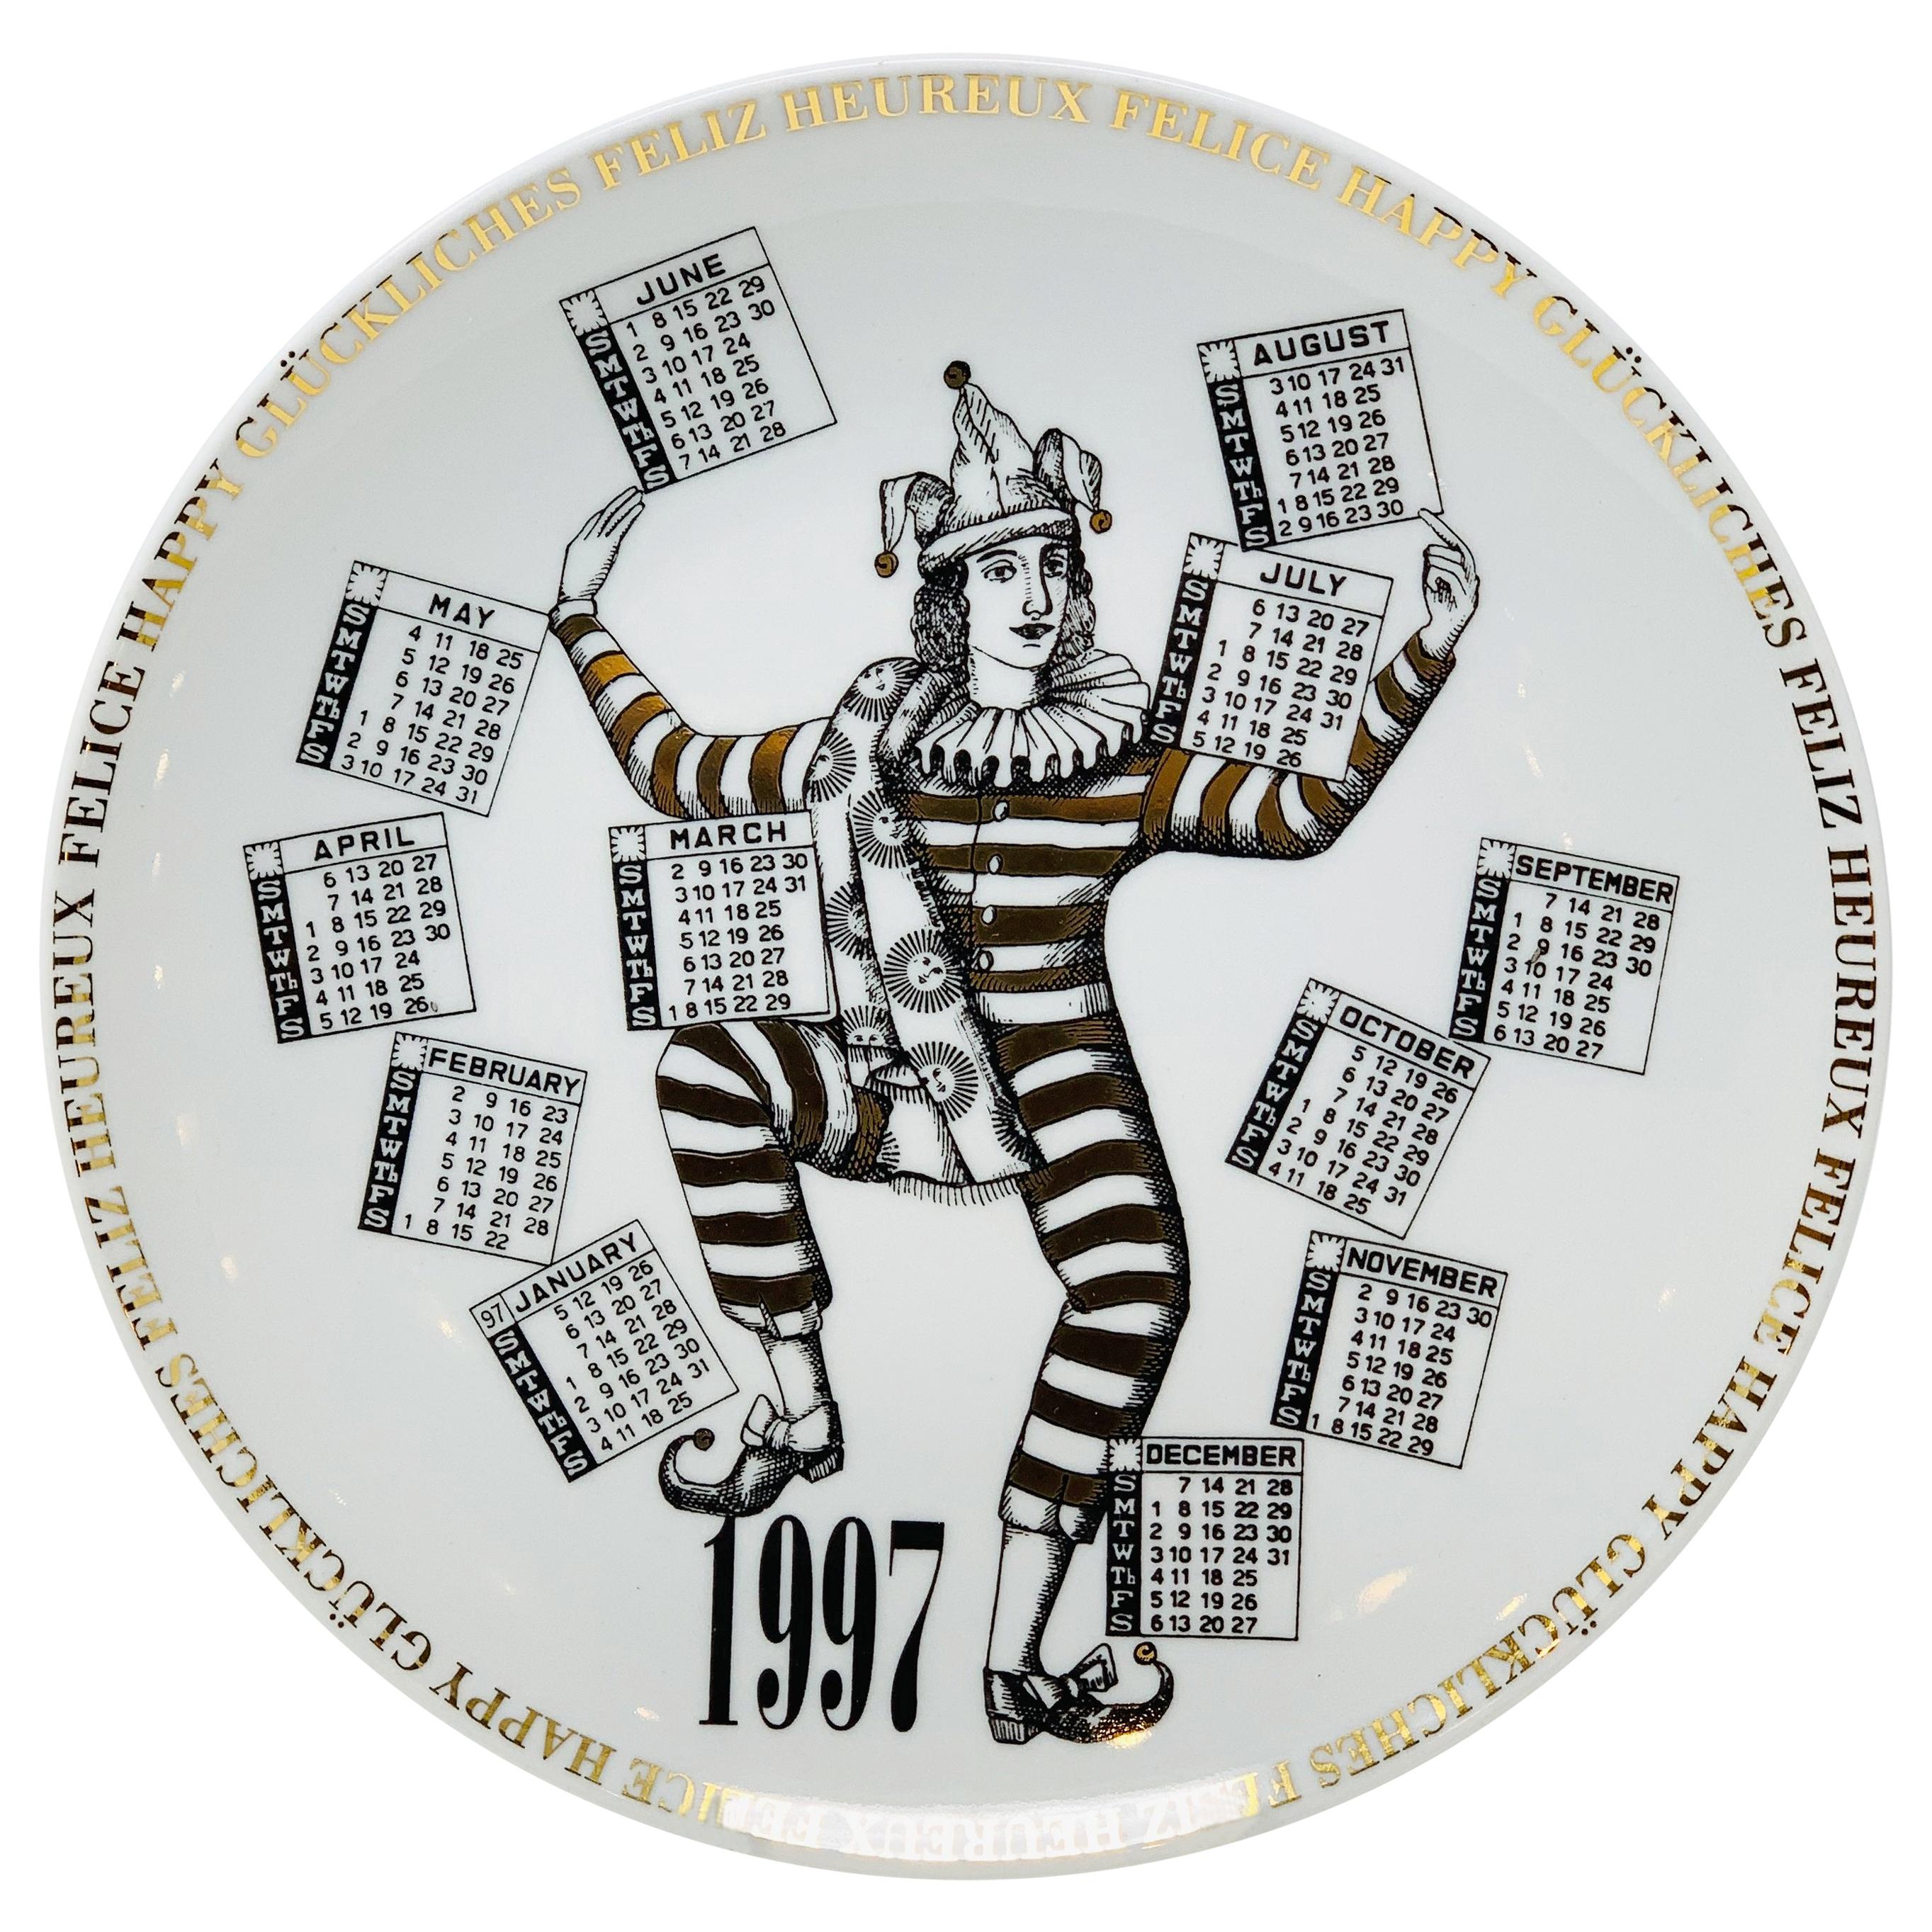 Piero Fornasetti Calendar Porcelain Plate for the Year 1997